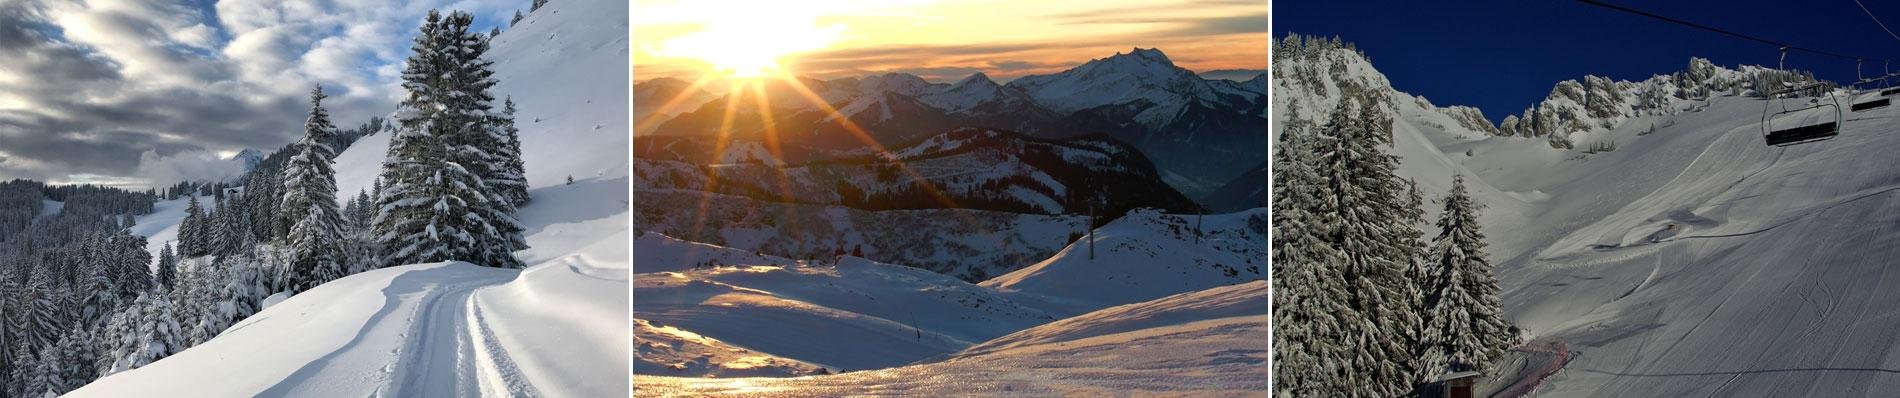 hotel esprit montagne skivakantie wintersport frankrijk portes du soleil